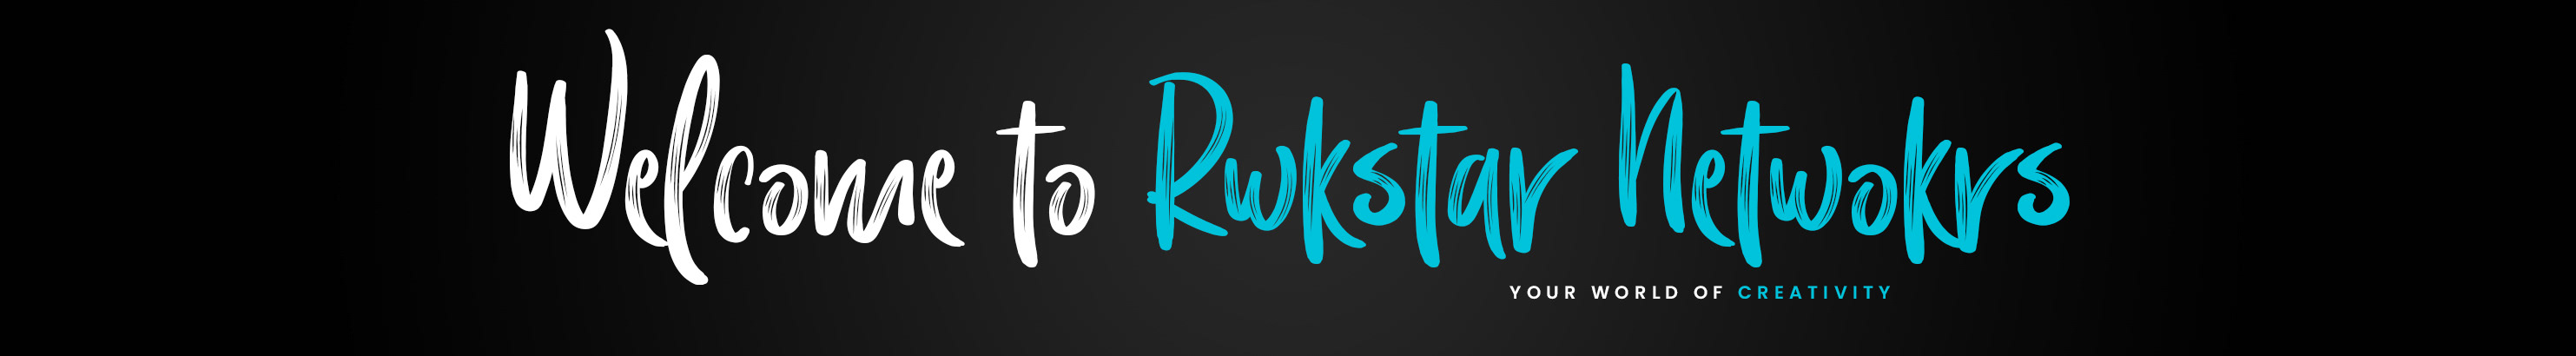 Rwkstar Networks 的個人檔案橫幅